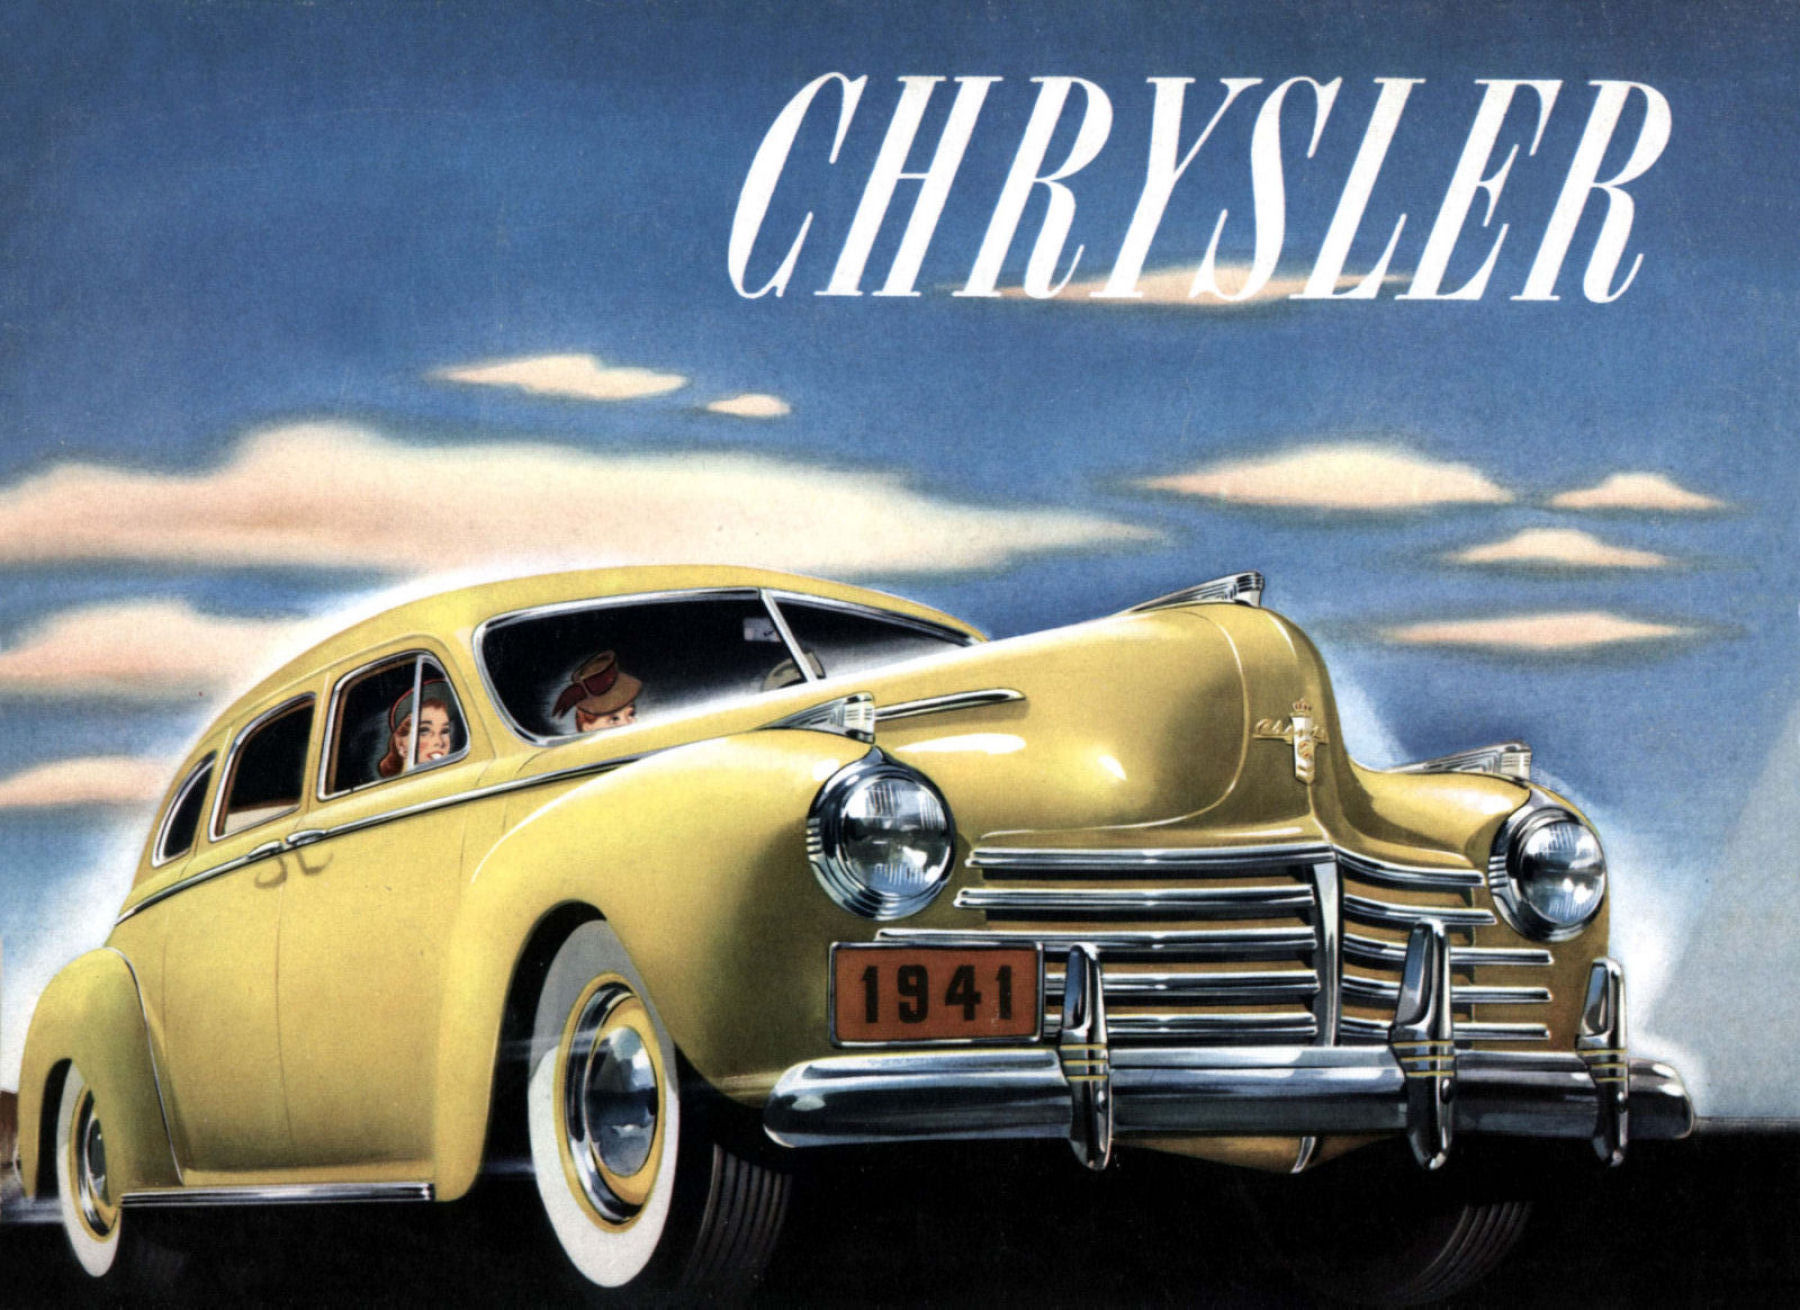 1941 Chrysler Foldout-01